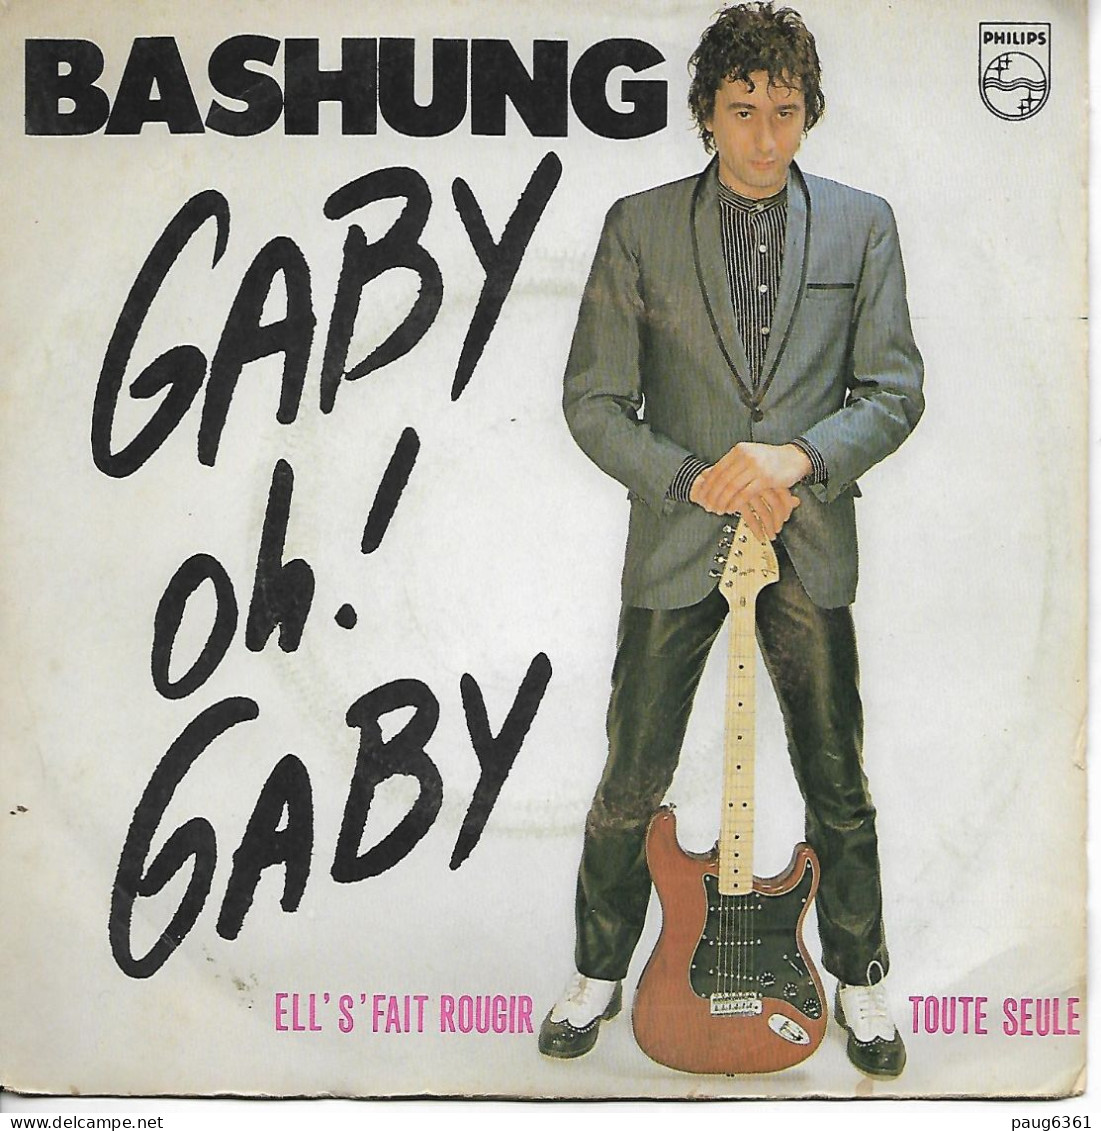 Bashung Gaby Oh! Gaby - Ell's'fait Rougir Toute Seule - Philips - 6172 310 PG 100 - Phonogram  BON ETAT VG - Sonstige - Franz. Chansons